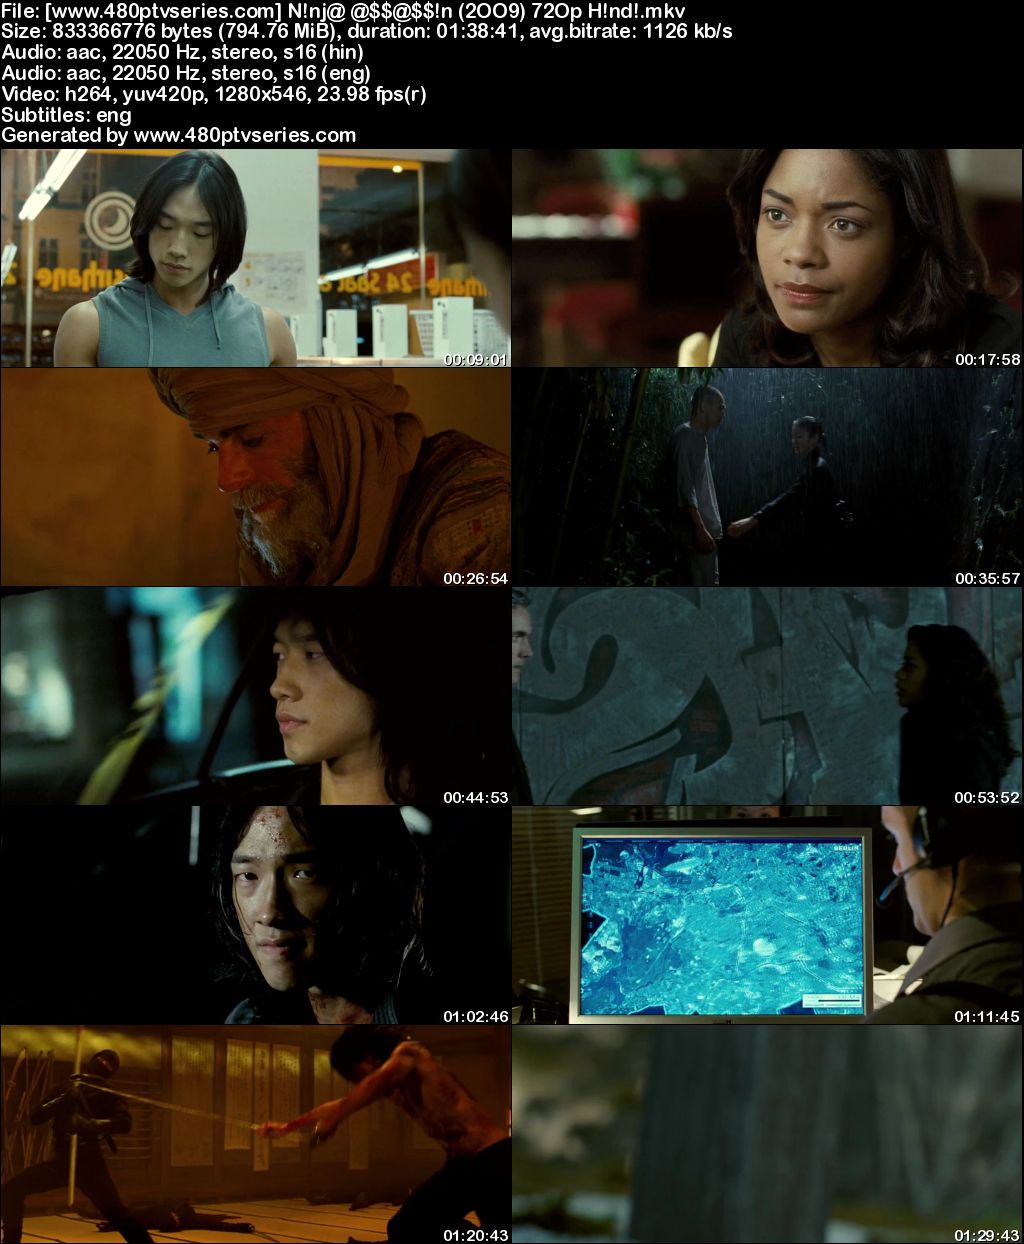 Ninja Assassin (2009) Bluray Full Hindi Dubbed 480p 720p Movies